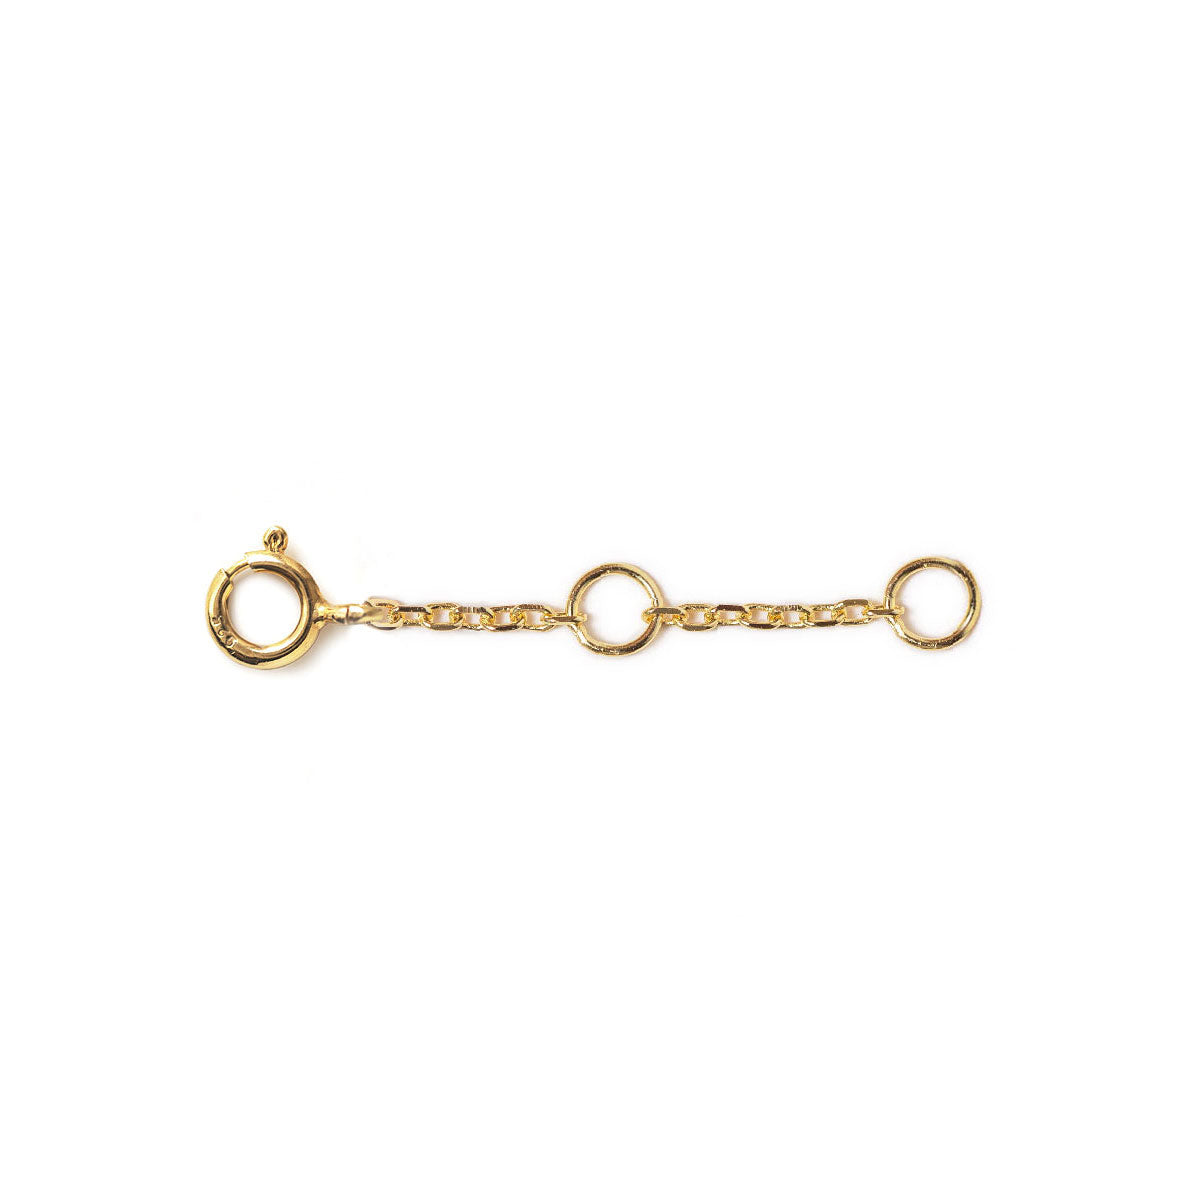 Chain extender- 14k White Solid Gold